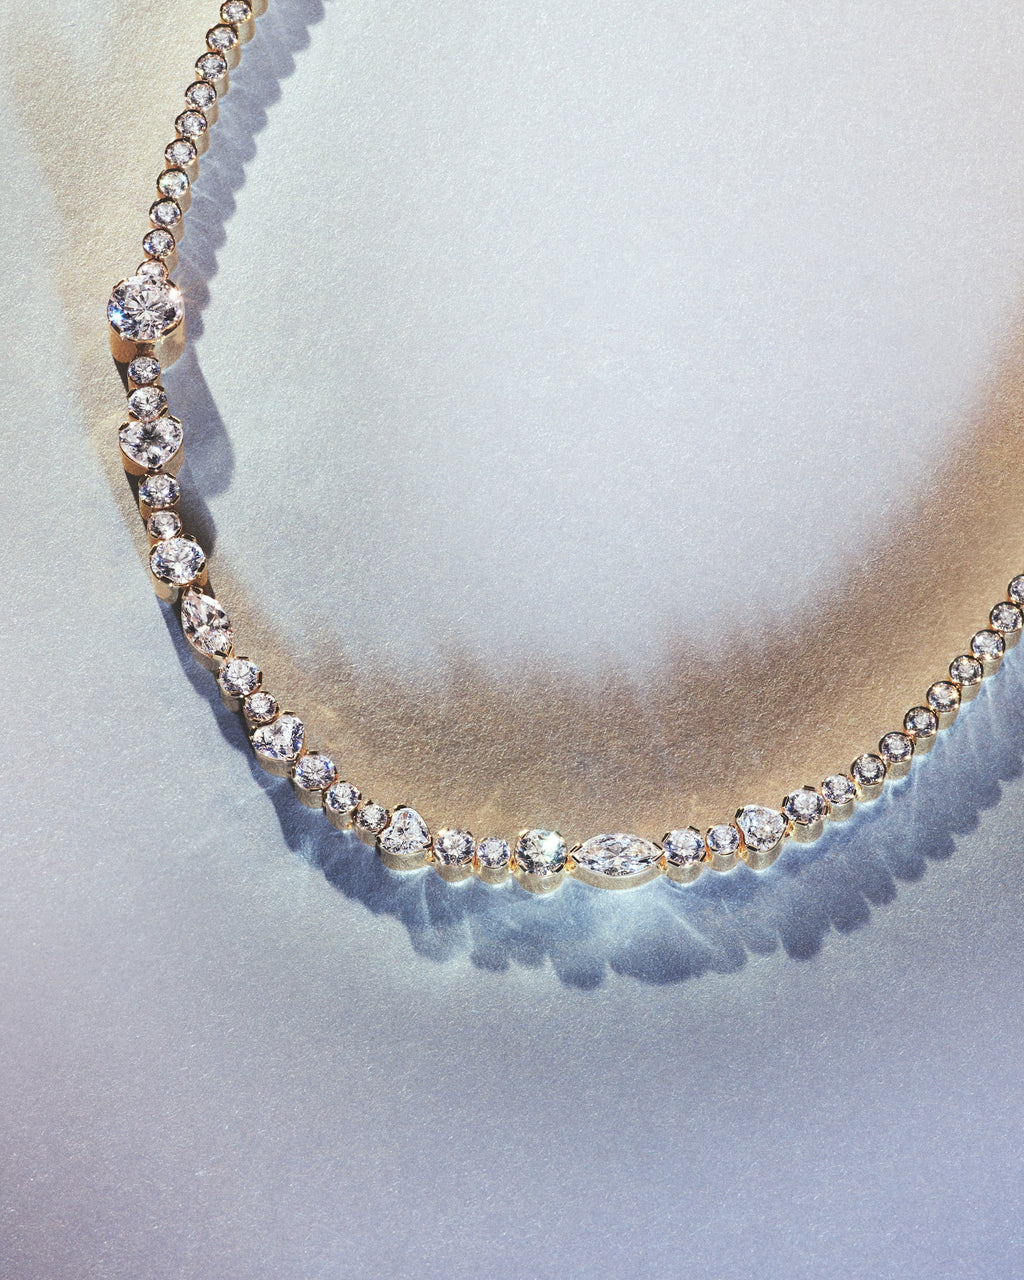 A diamond necklace with heart shaped diamonds.